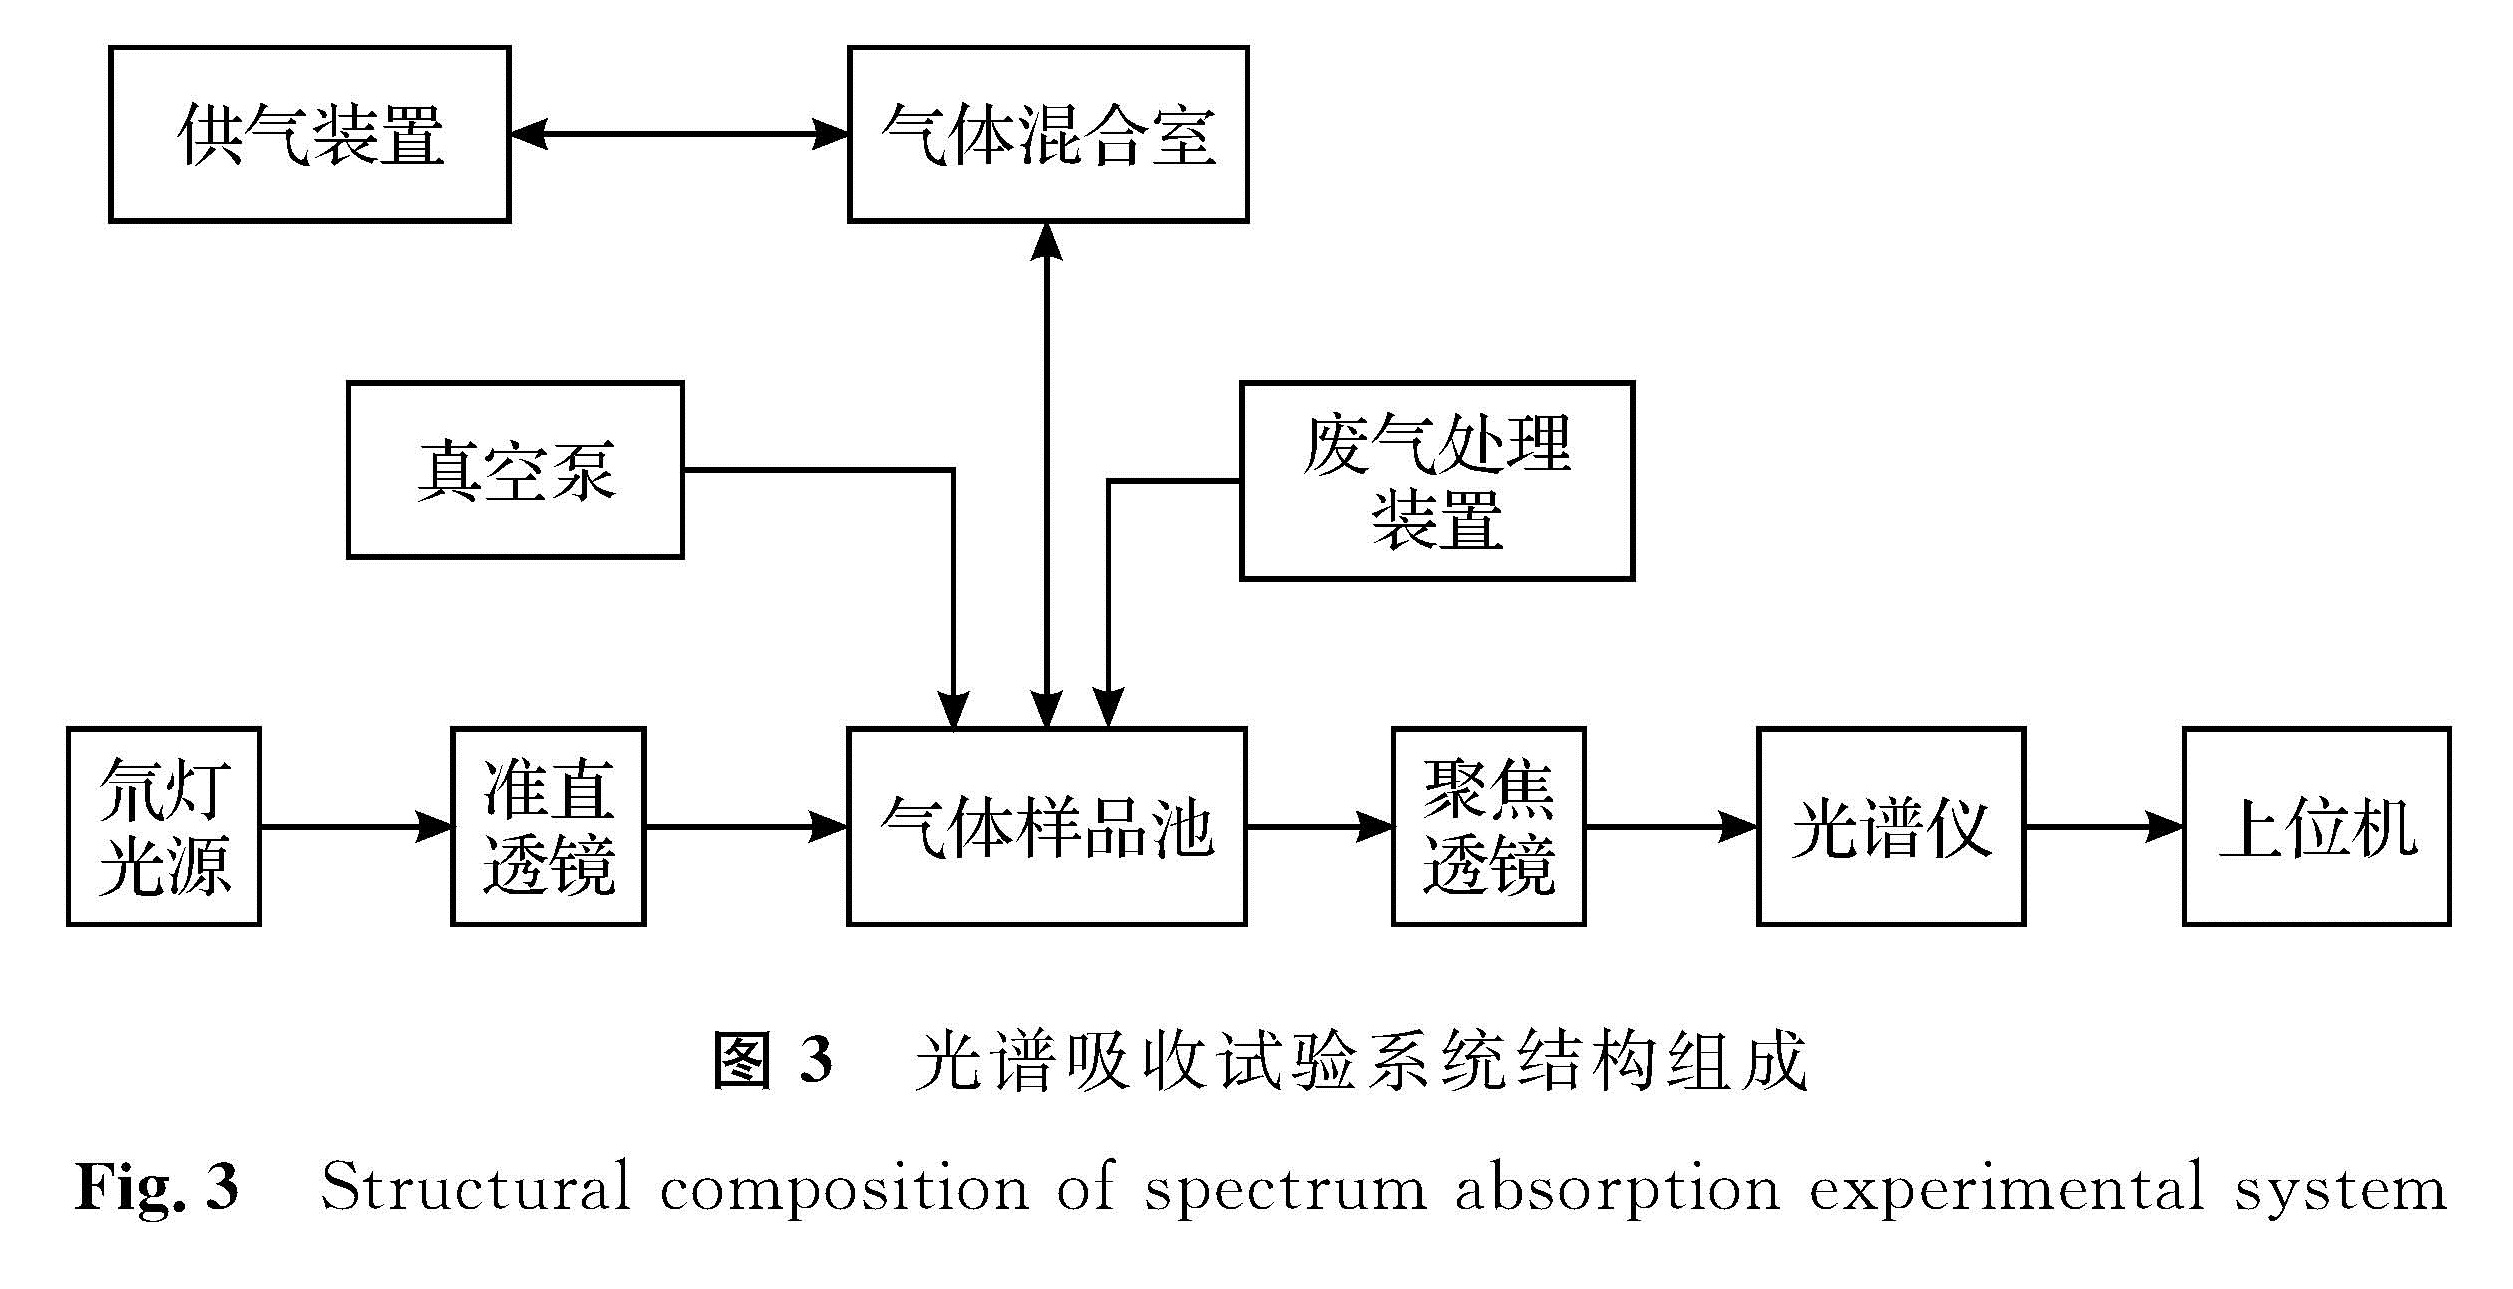 图3 光谱吸收试验系统结构组成<br/>Fig.3 Structural composition of spectrum absorption experimental system